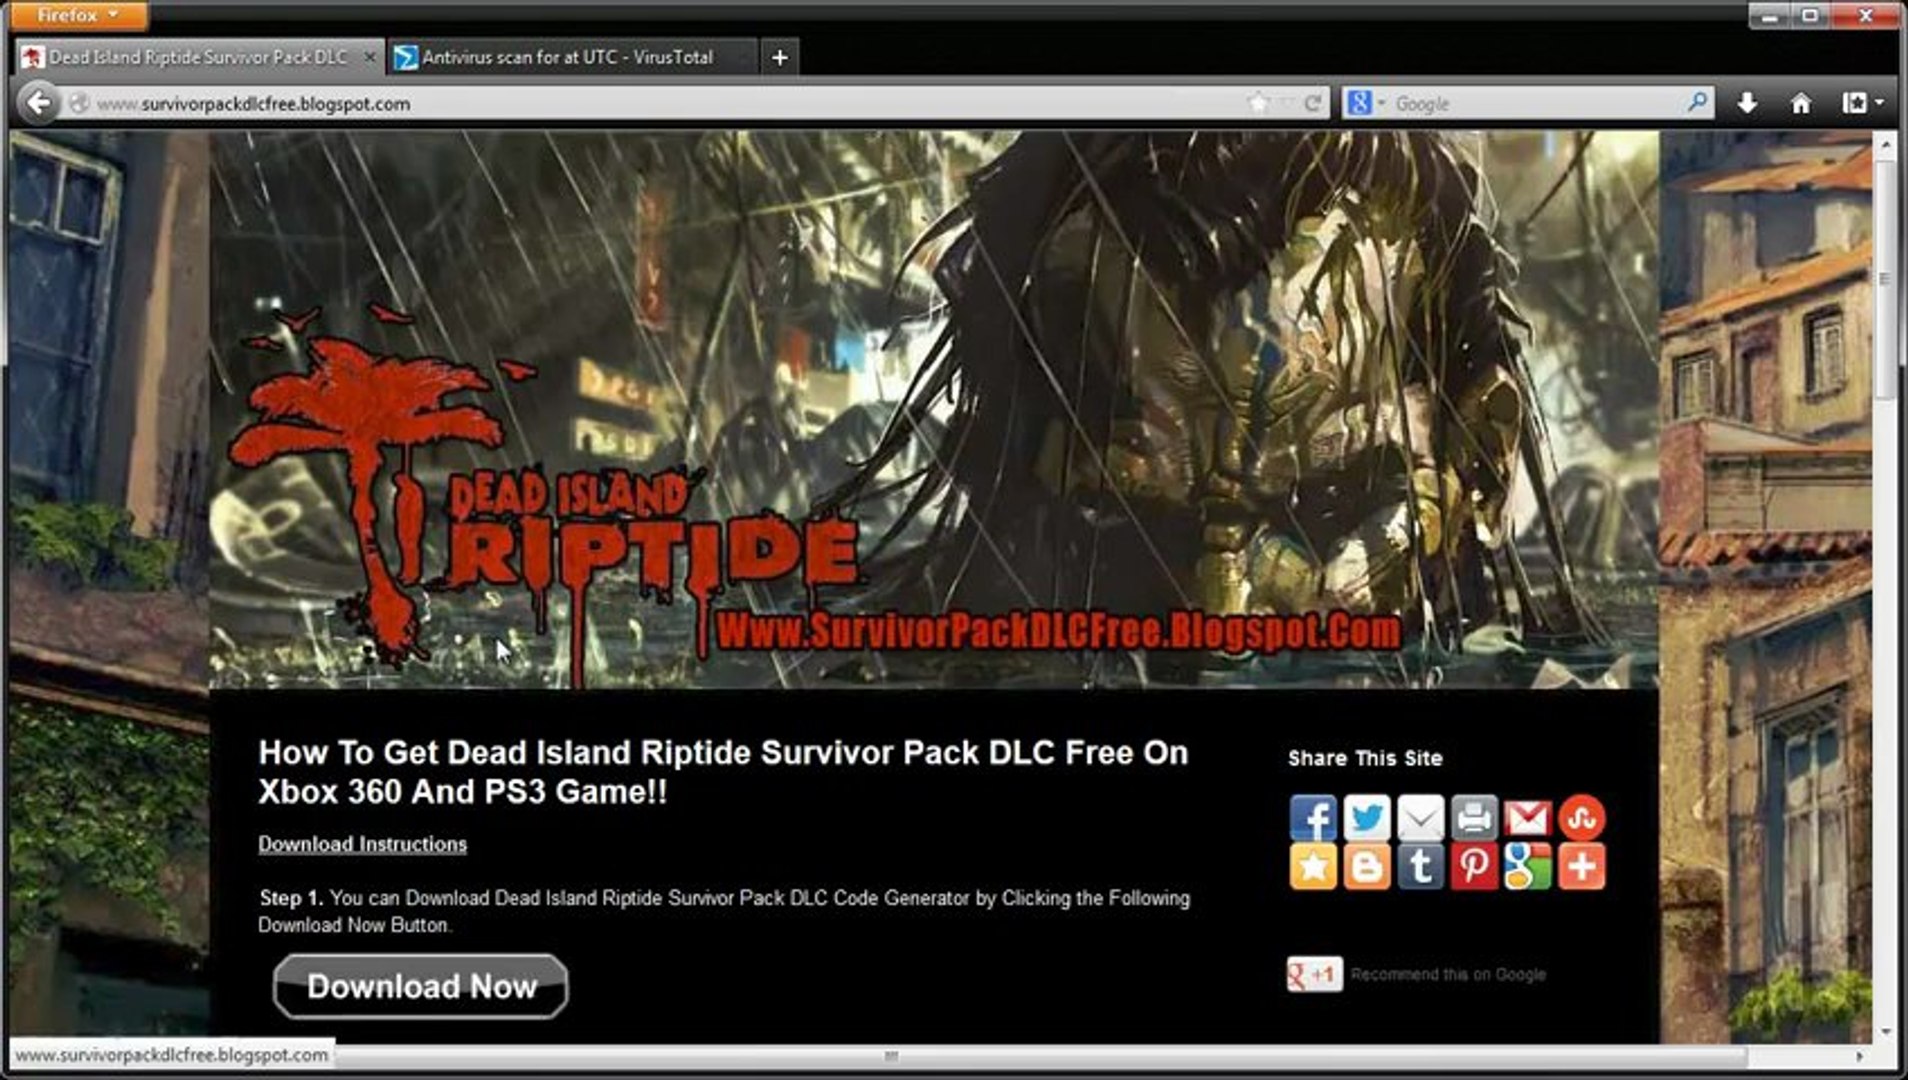 Dead Island: Riptide Definitive Edition Cheats & Trainers for PC